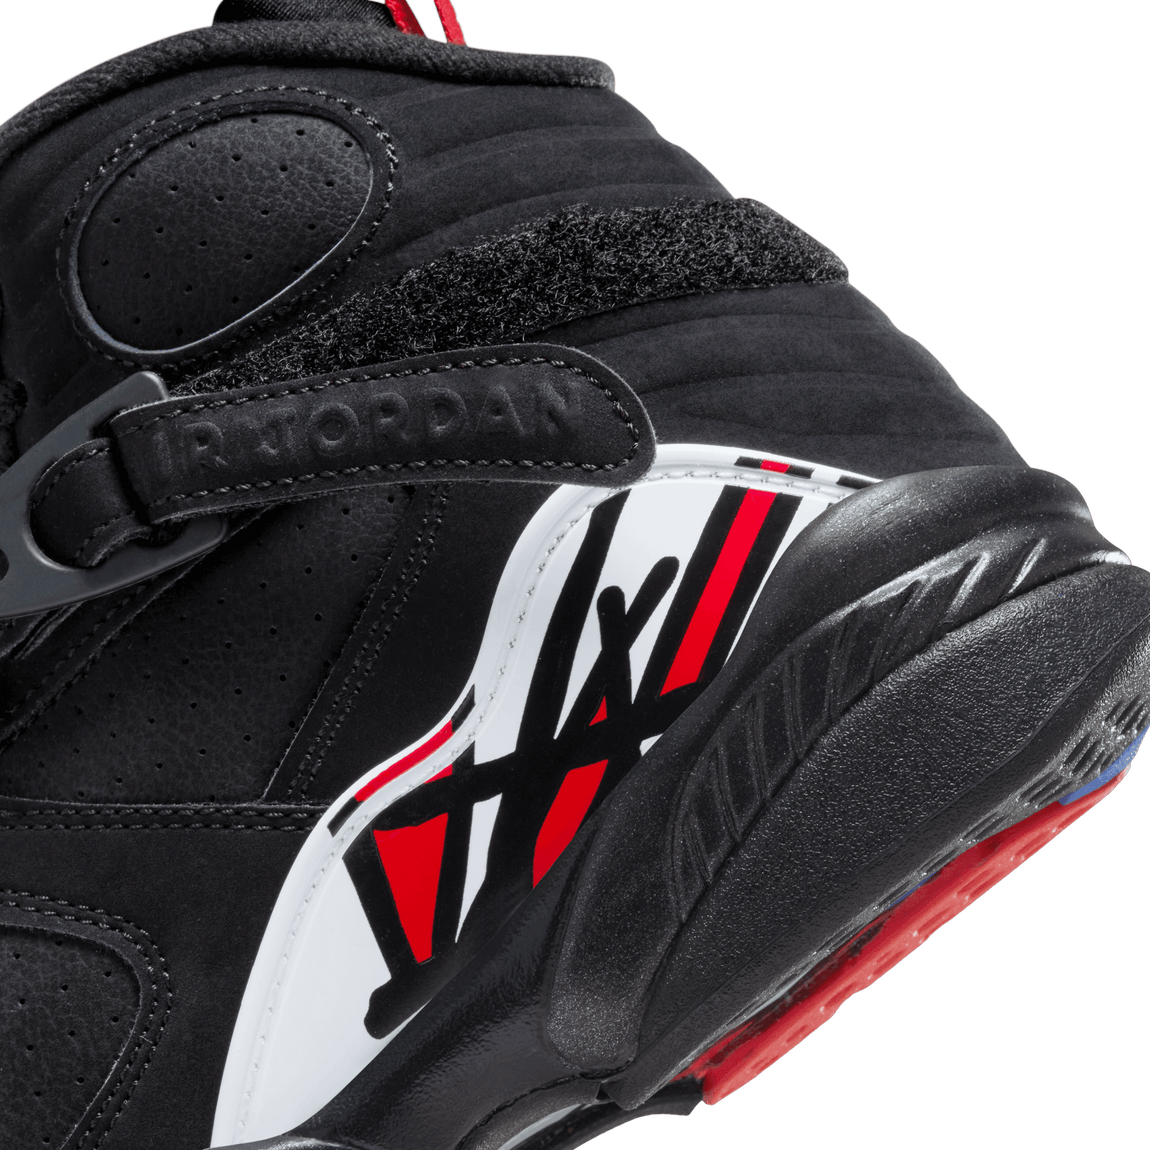 Air Jordan 8 Retro “Playoffs” GS (Black/True Red-White) 9/30 - Air Jordan 8 Retro “Playoffs” GS (Black/True Red-White) 9/30 - 